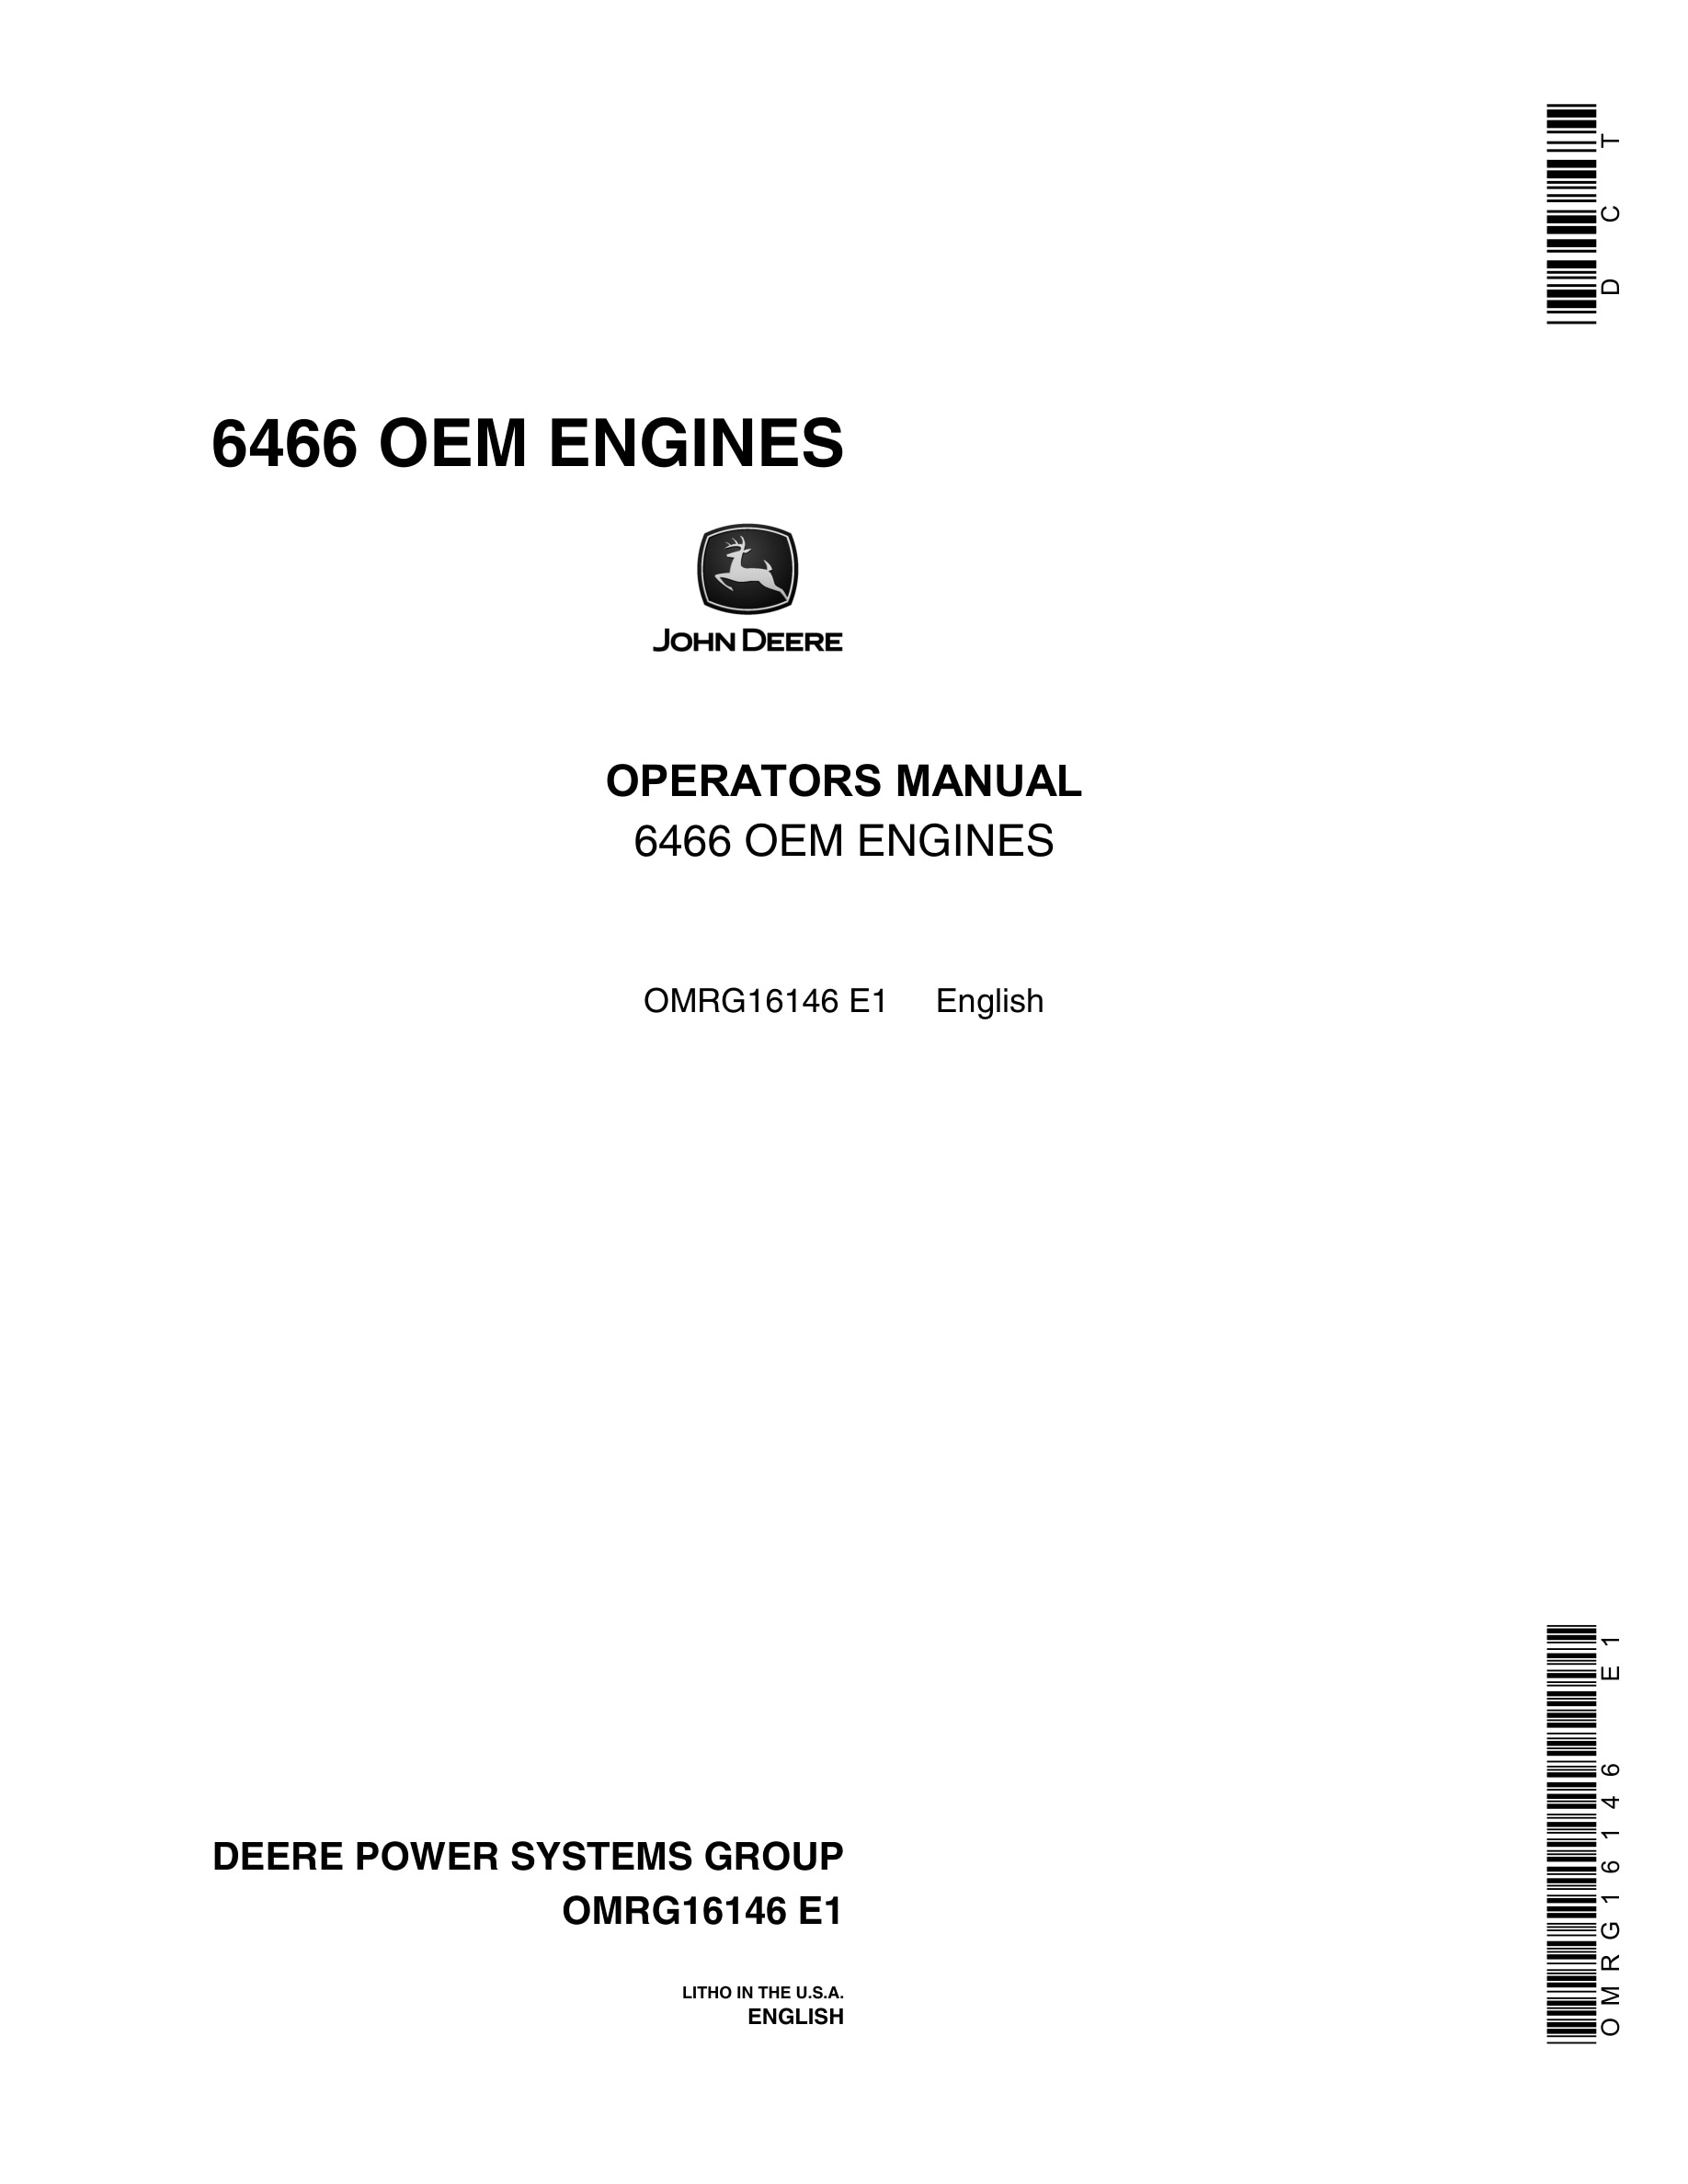 John Deere PowerTech 6466 OEM ENGINES Operator Manual OMRG16146-1